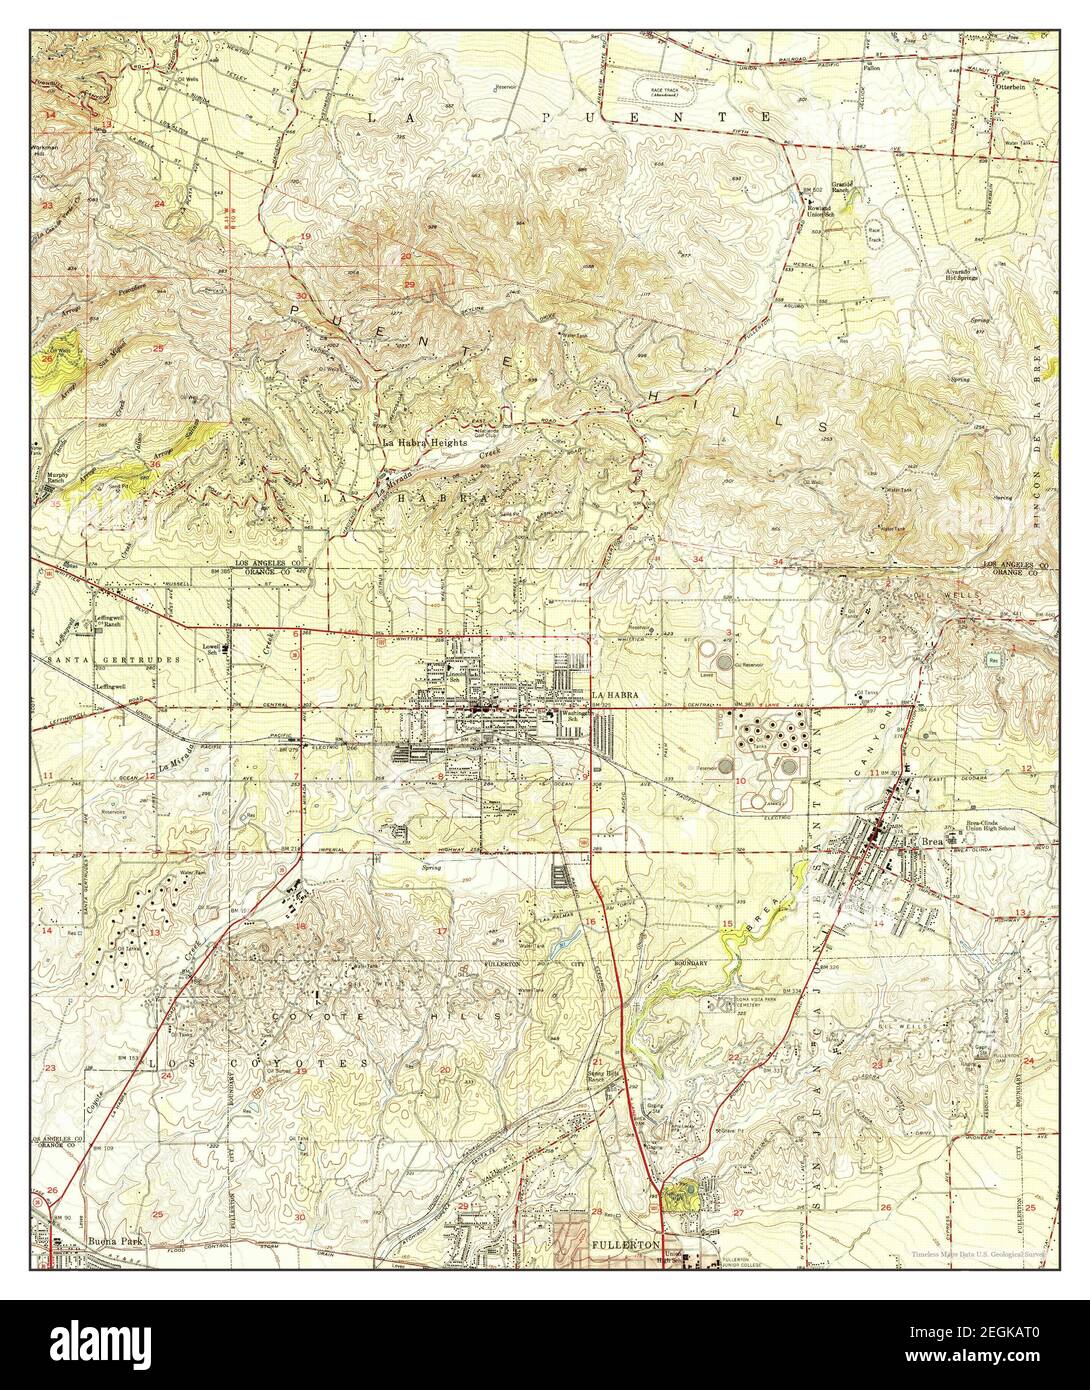 La Habra, California, map 1950, 1:24000, United States of America by Timeless Maps, data U.S. Geological Survey Stock Photo